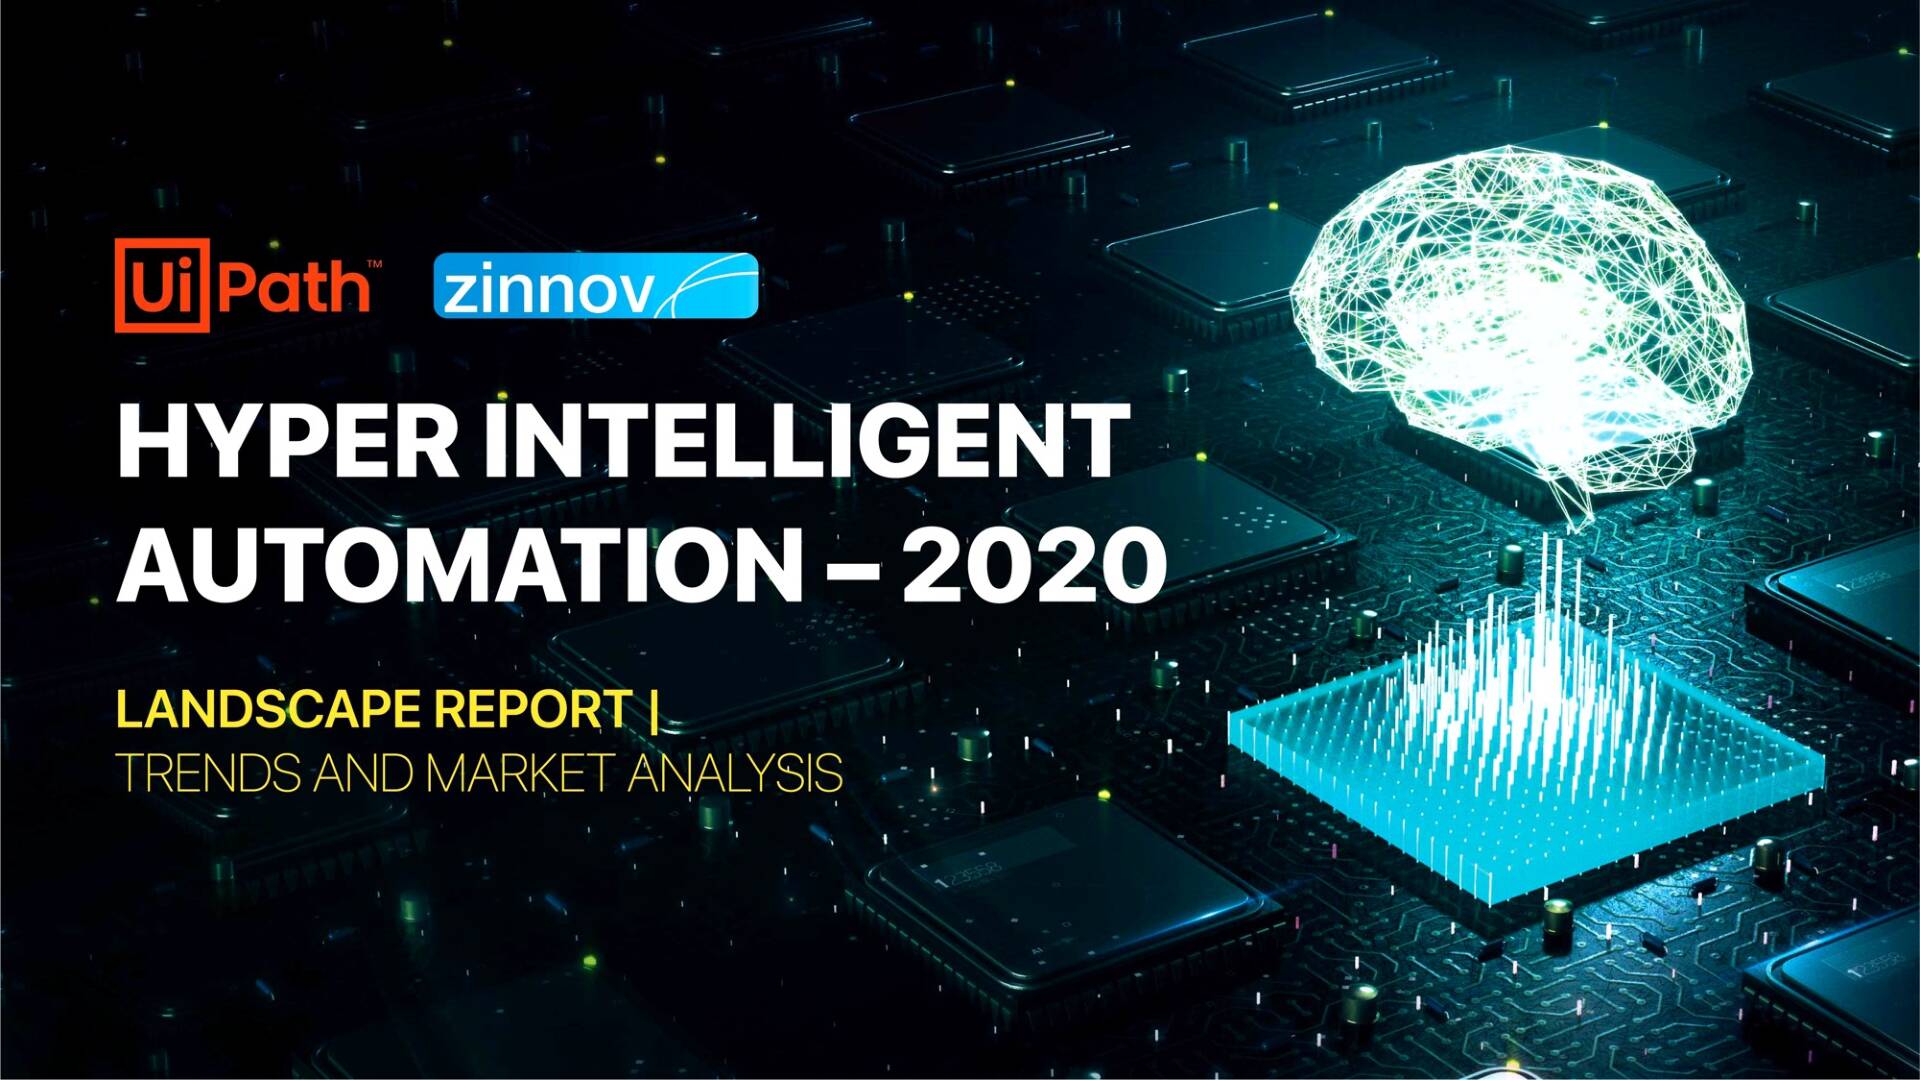 Hyper Intelligent Automation landscape report 2020